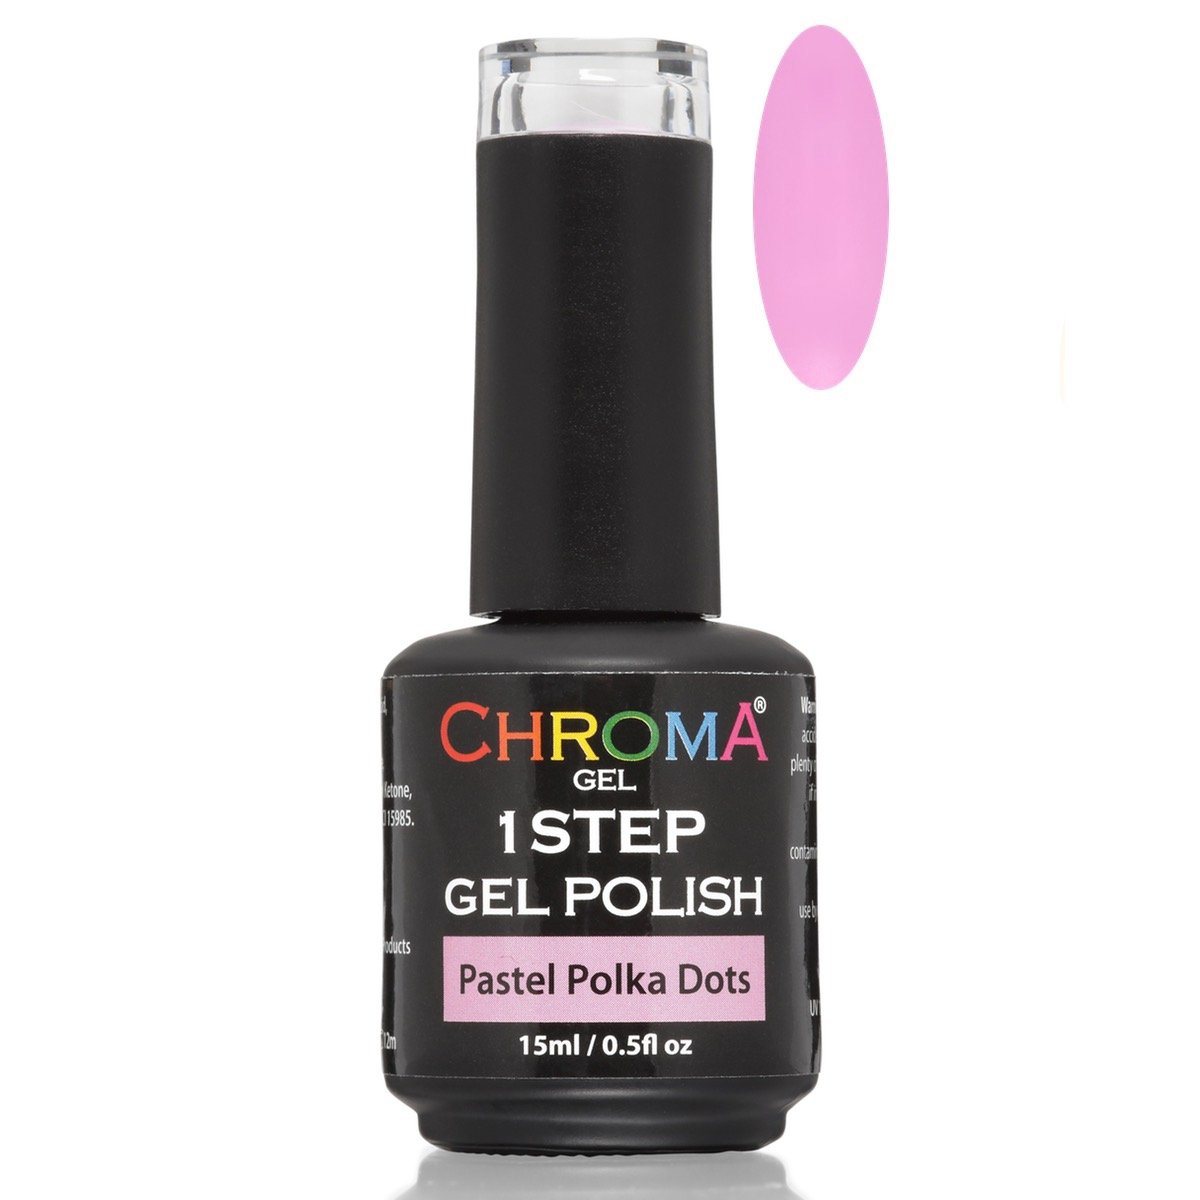 Chroma Gel 1 Step Gel Polish Pastel Polka Dots No.59 - Beauty Hair Products LtdChroma Gel